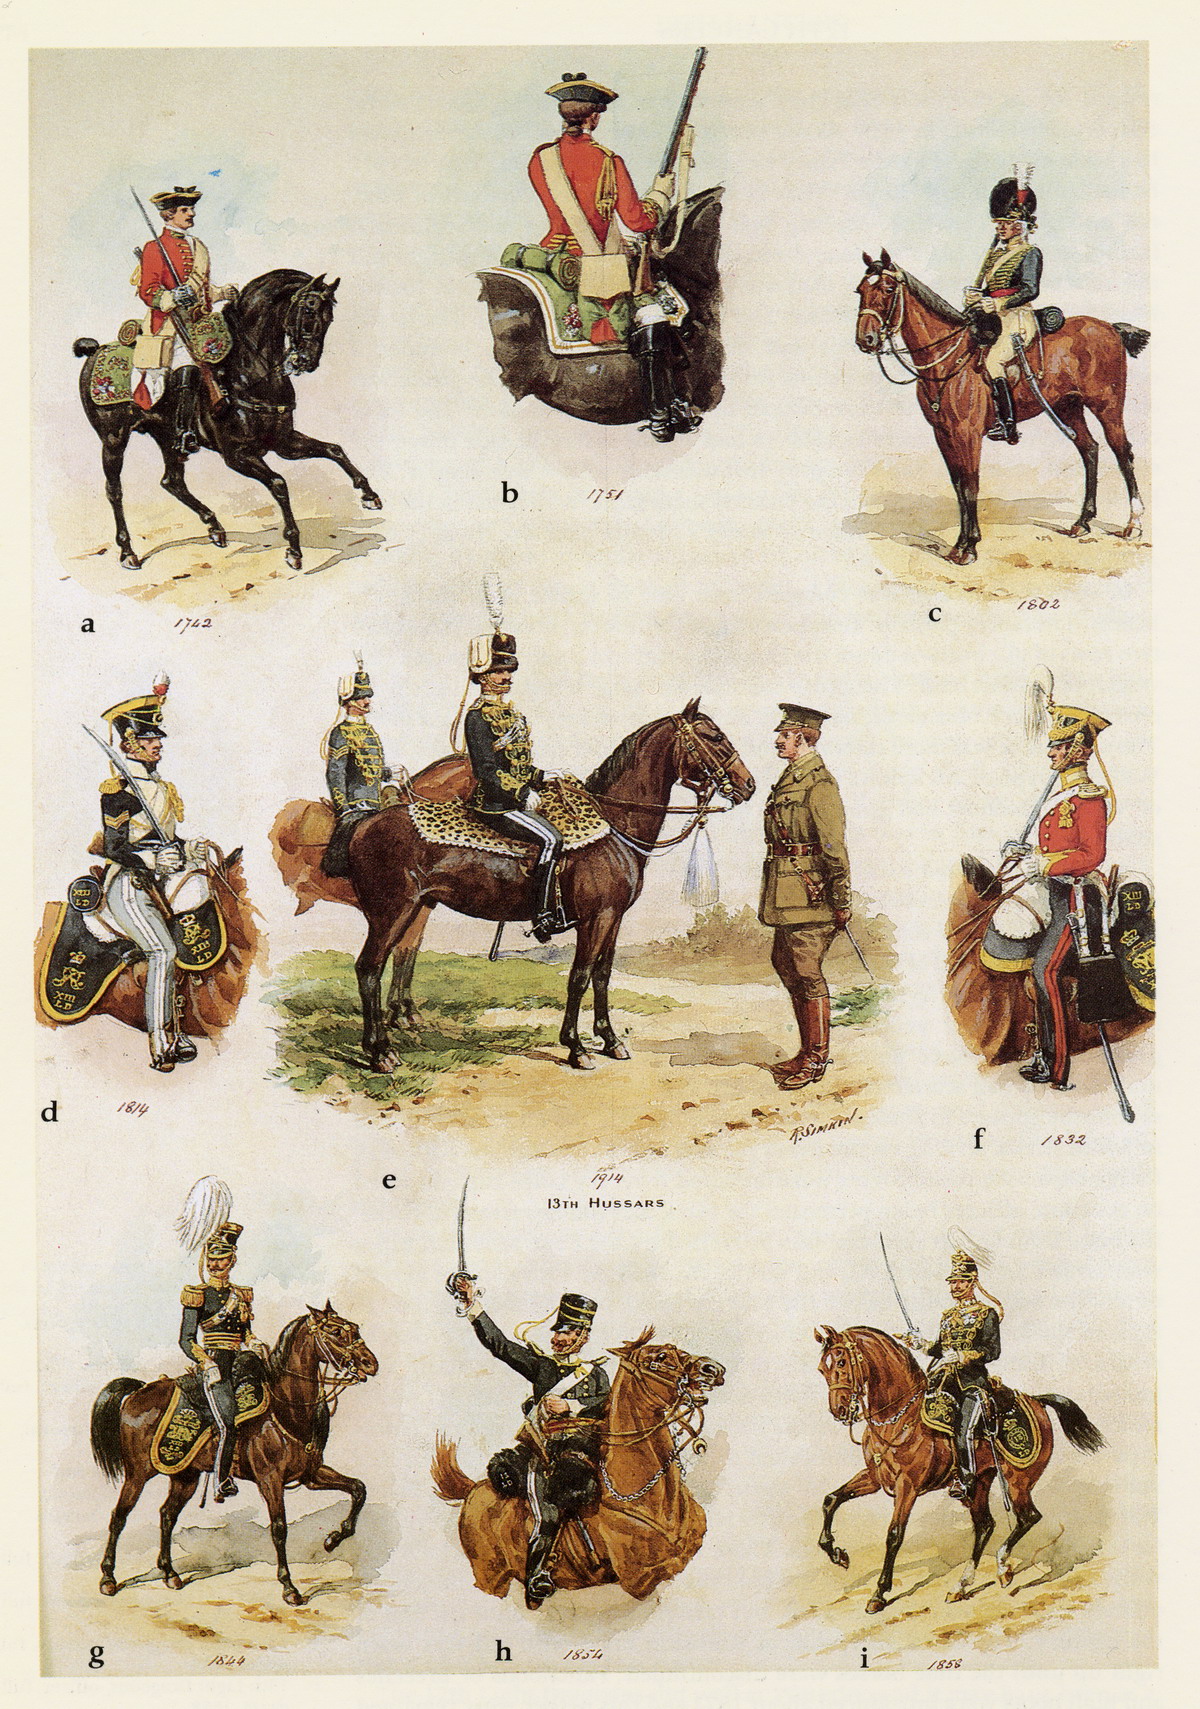 British; 13th Hussars by R.Simkin | British army uniform, Royal horse ...